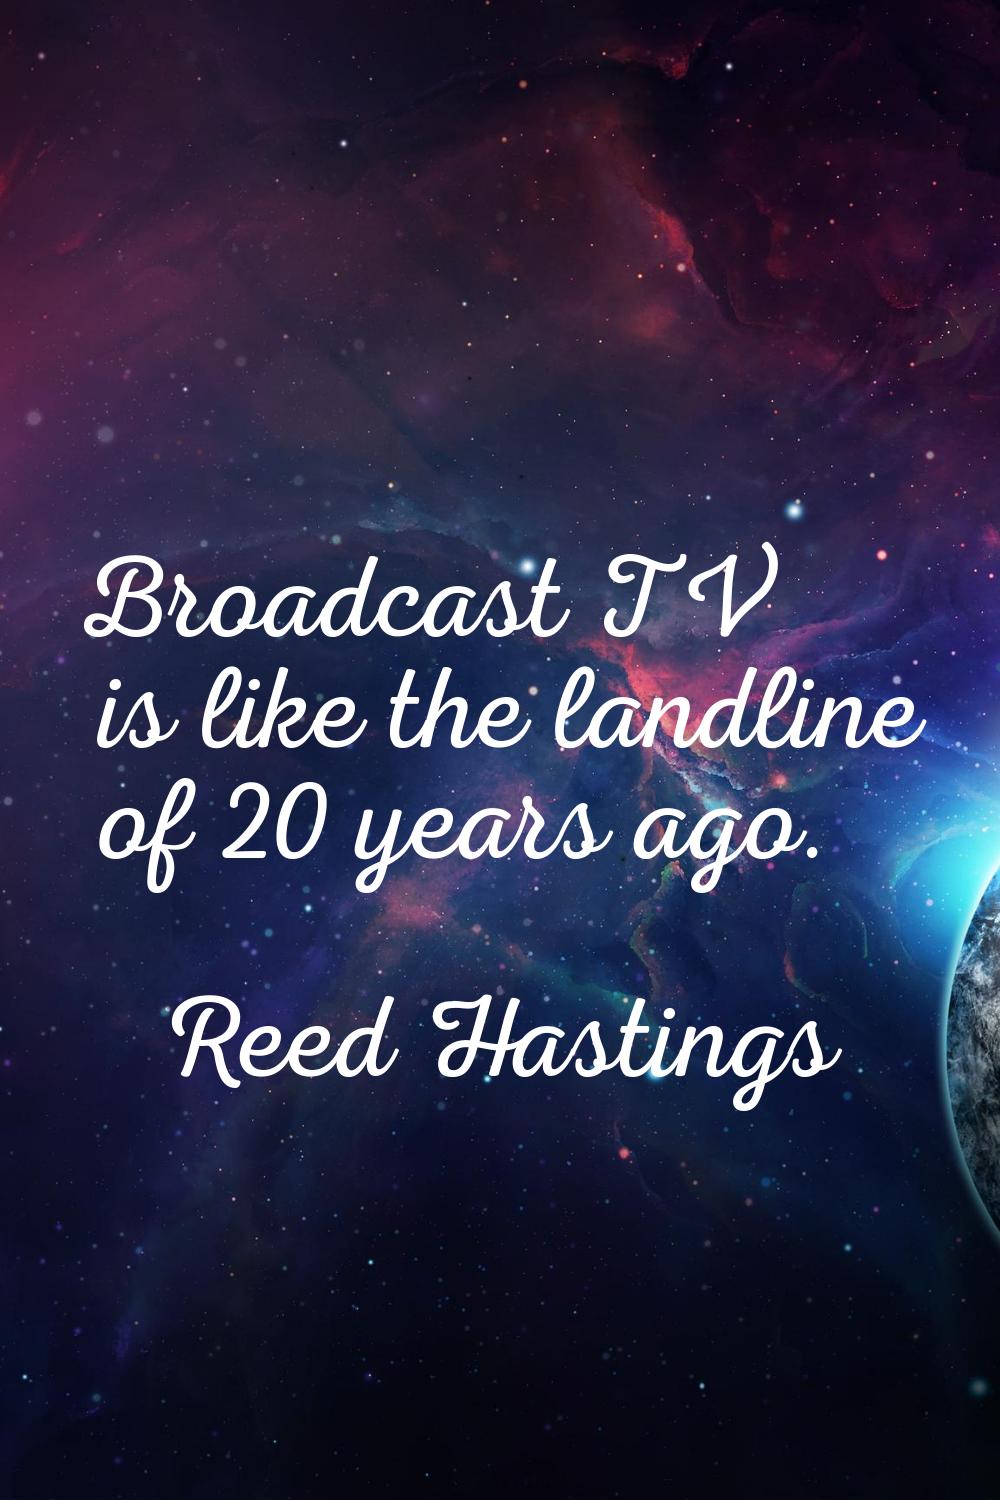 Broadcast TV is like the landline of 20 years ago.